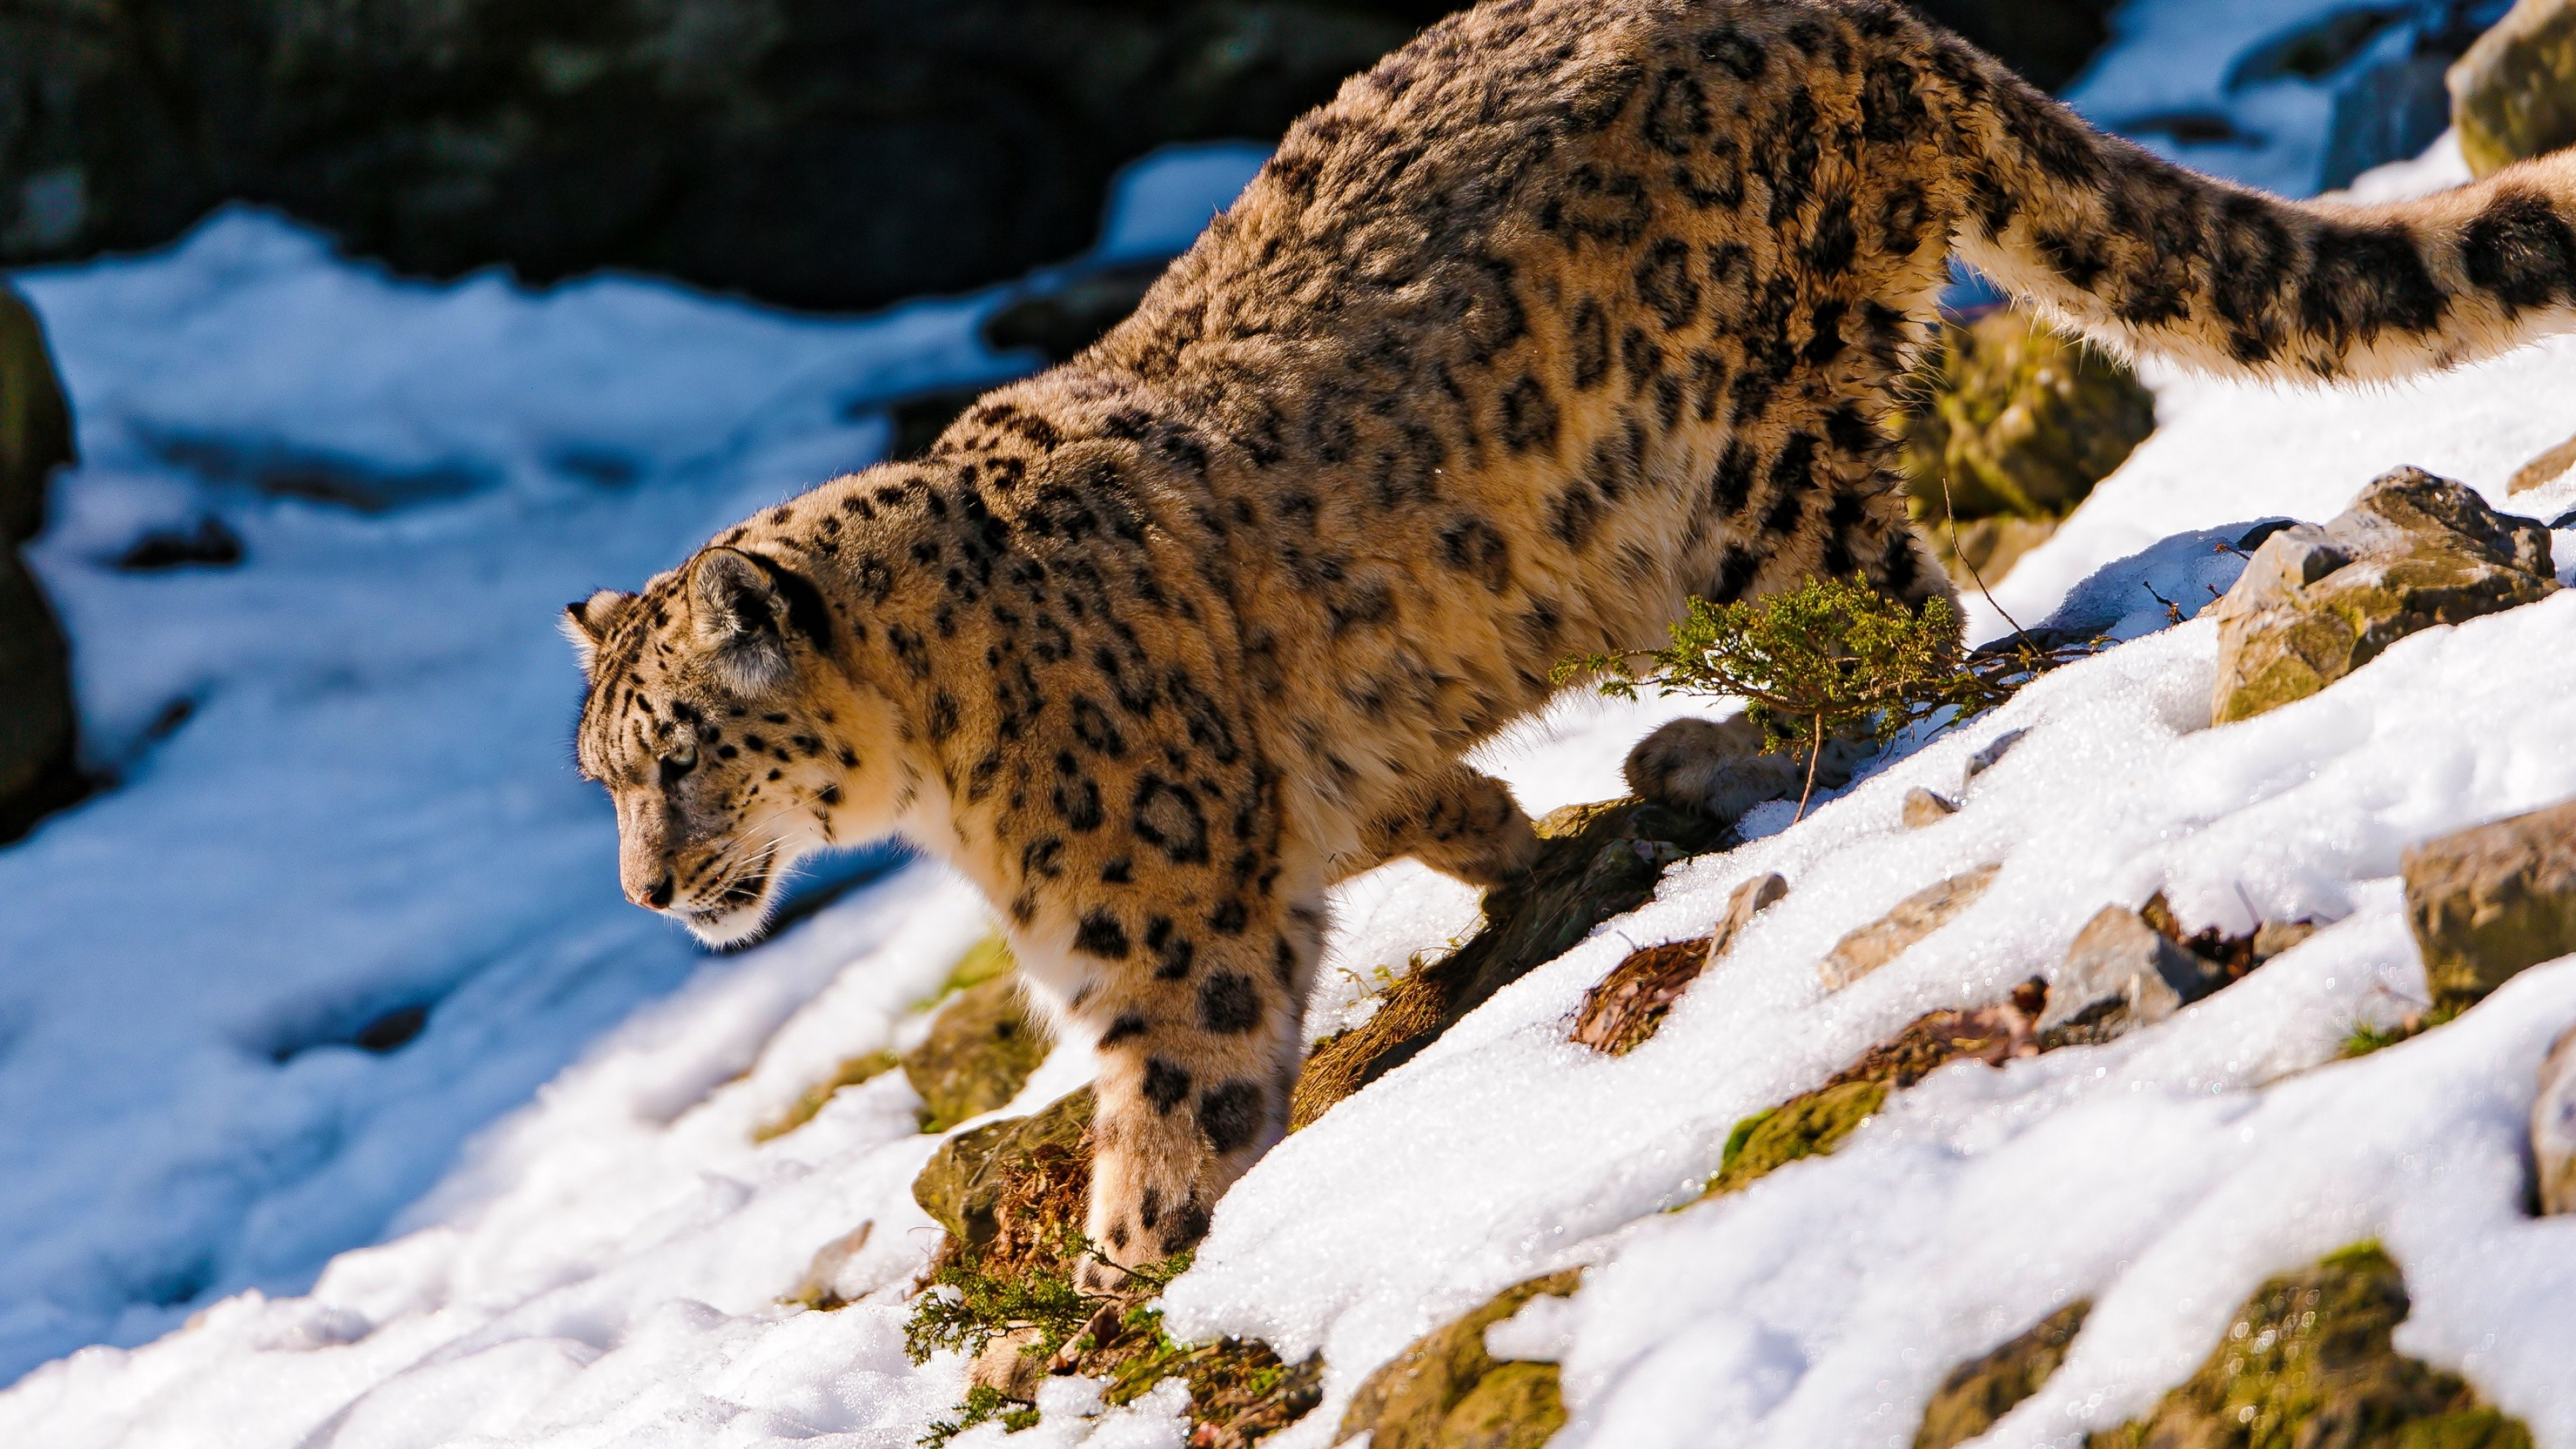 Osx snow leopard wallpapers, Background pictures, 3840x2160 4K Desktop